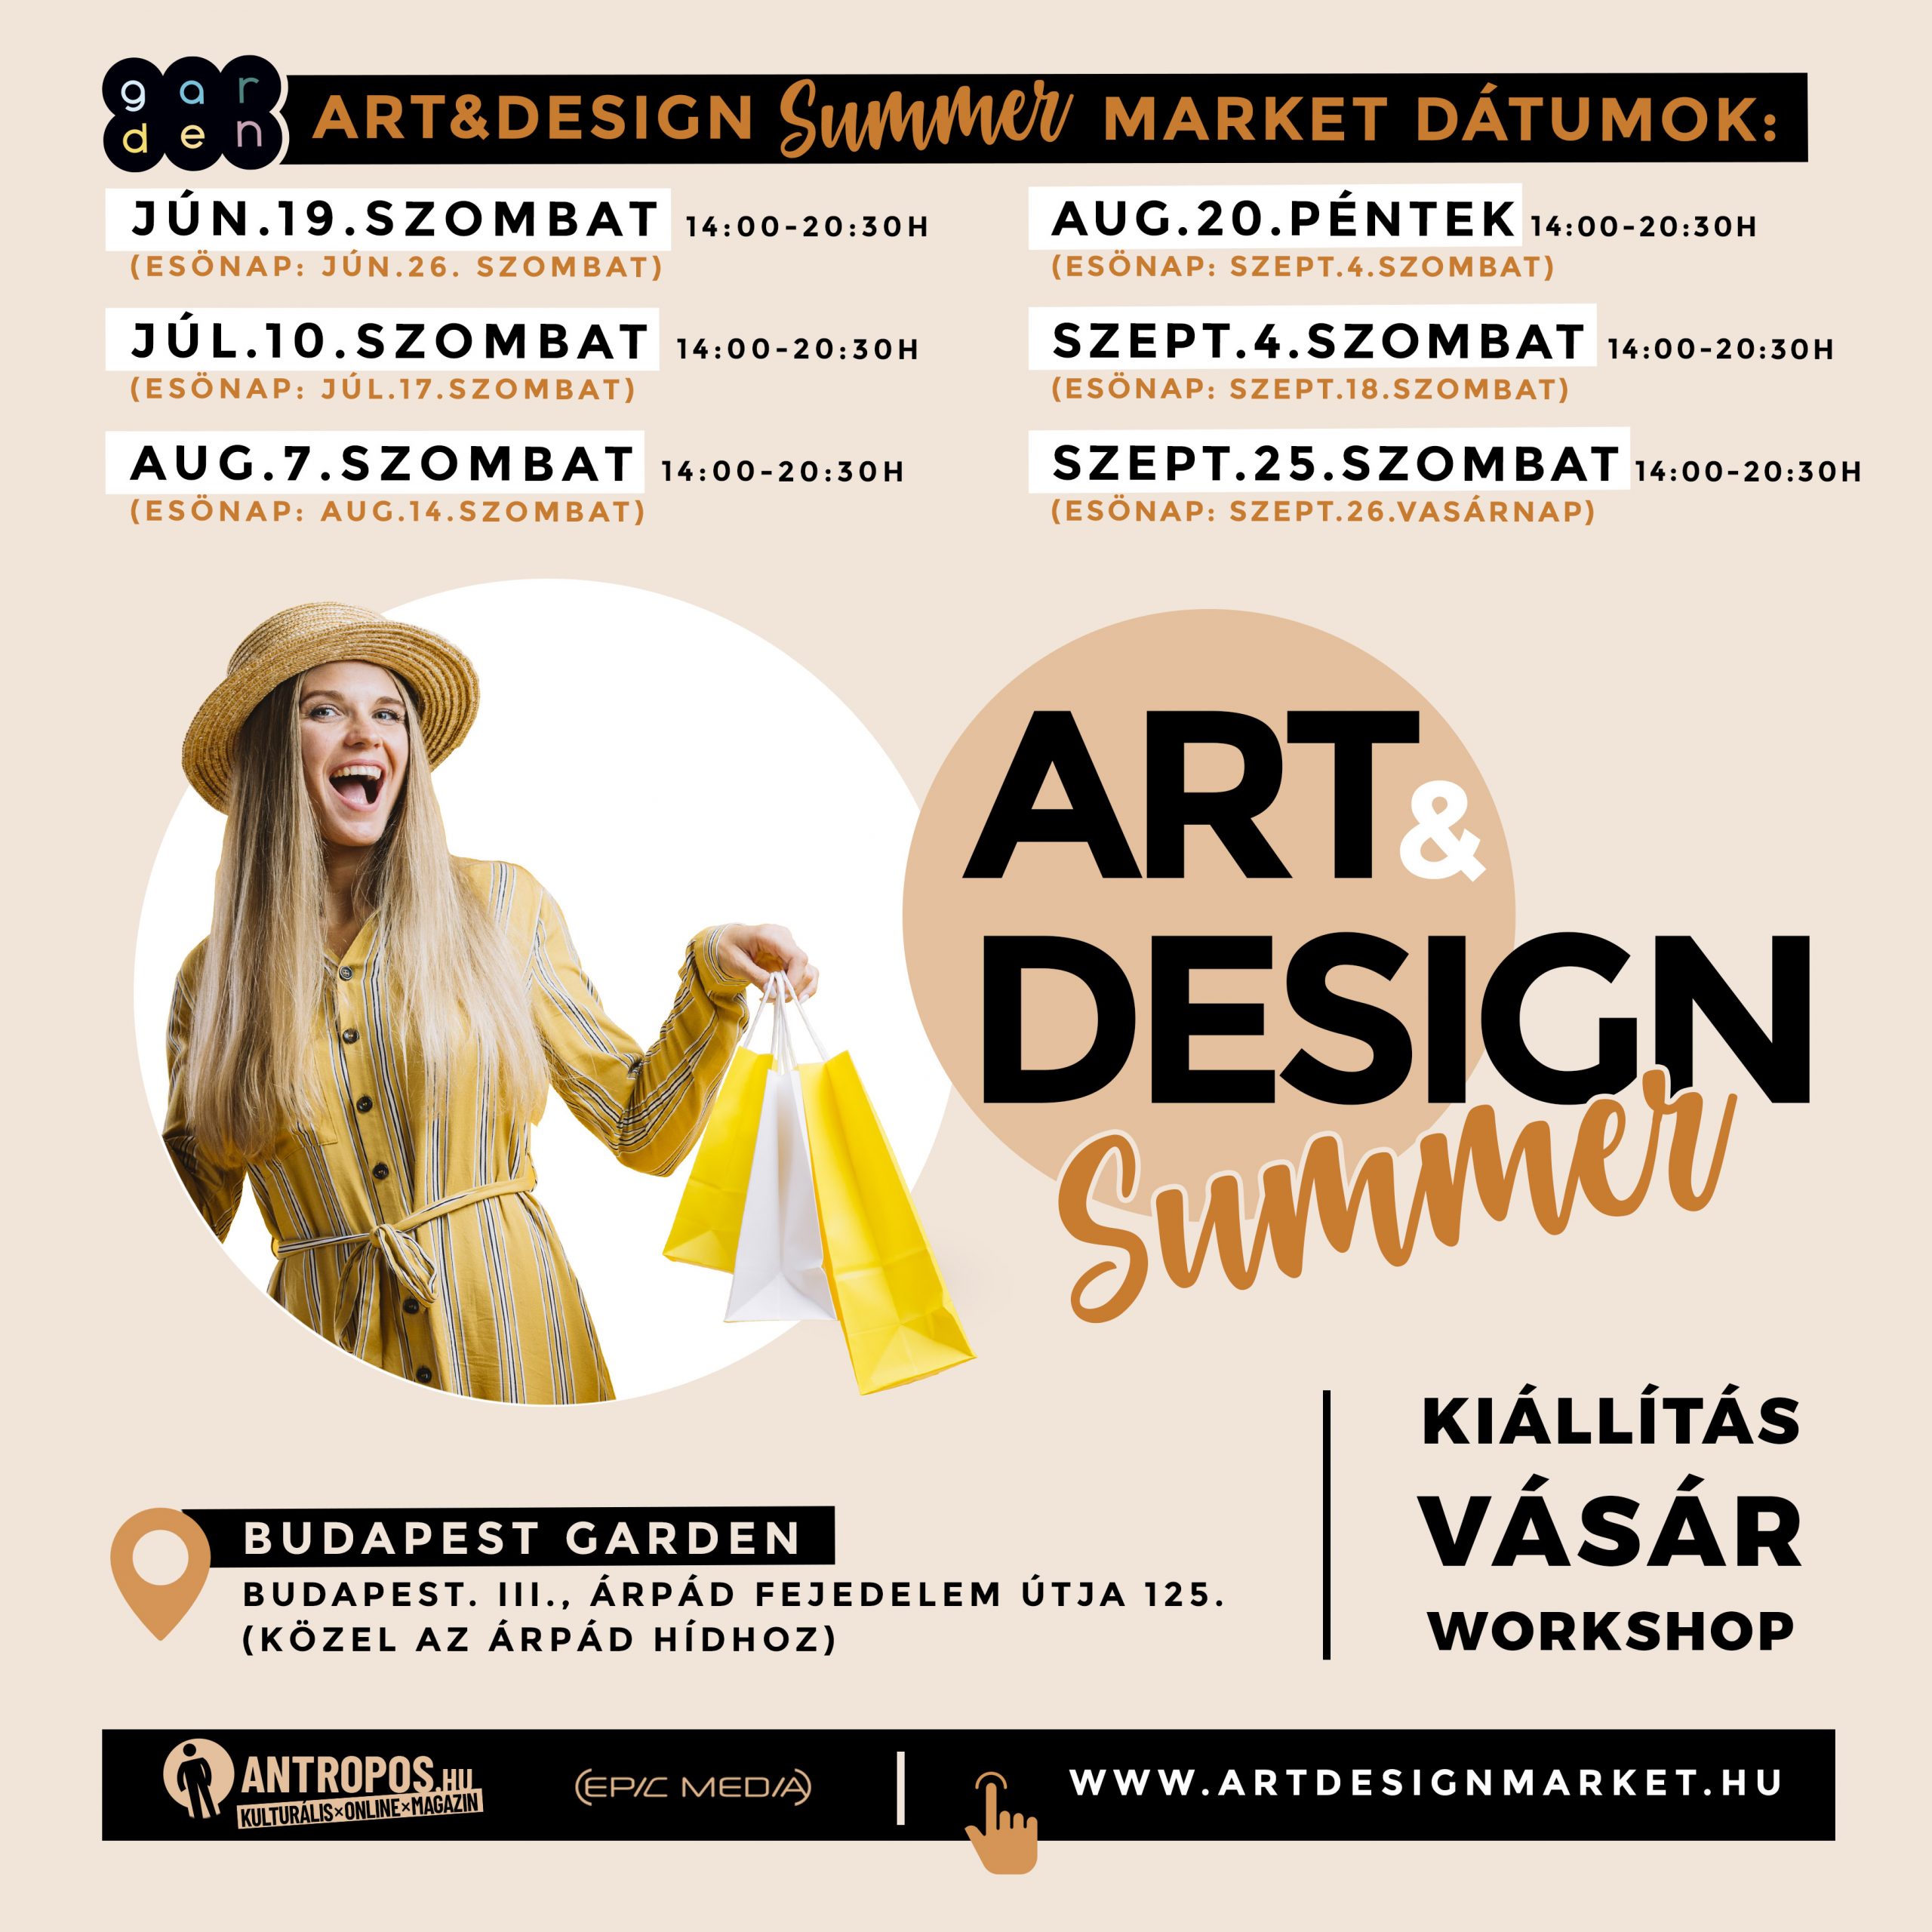 Antropos.hu Art&Design Summer Market - Budapest Garden